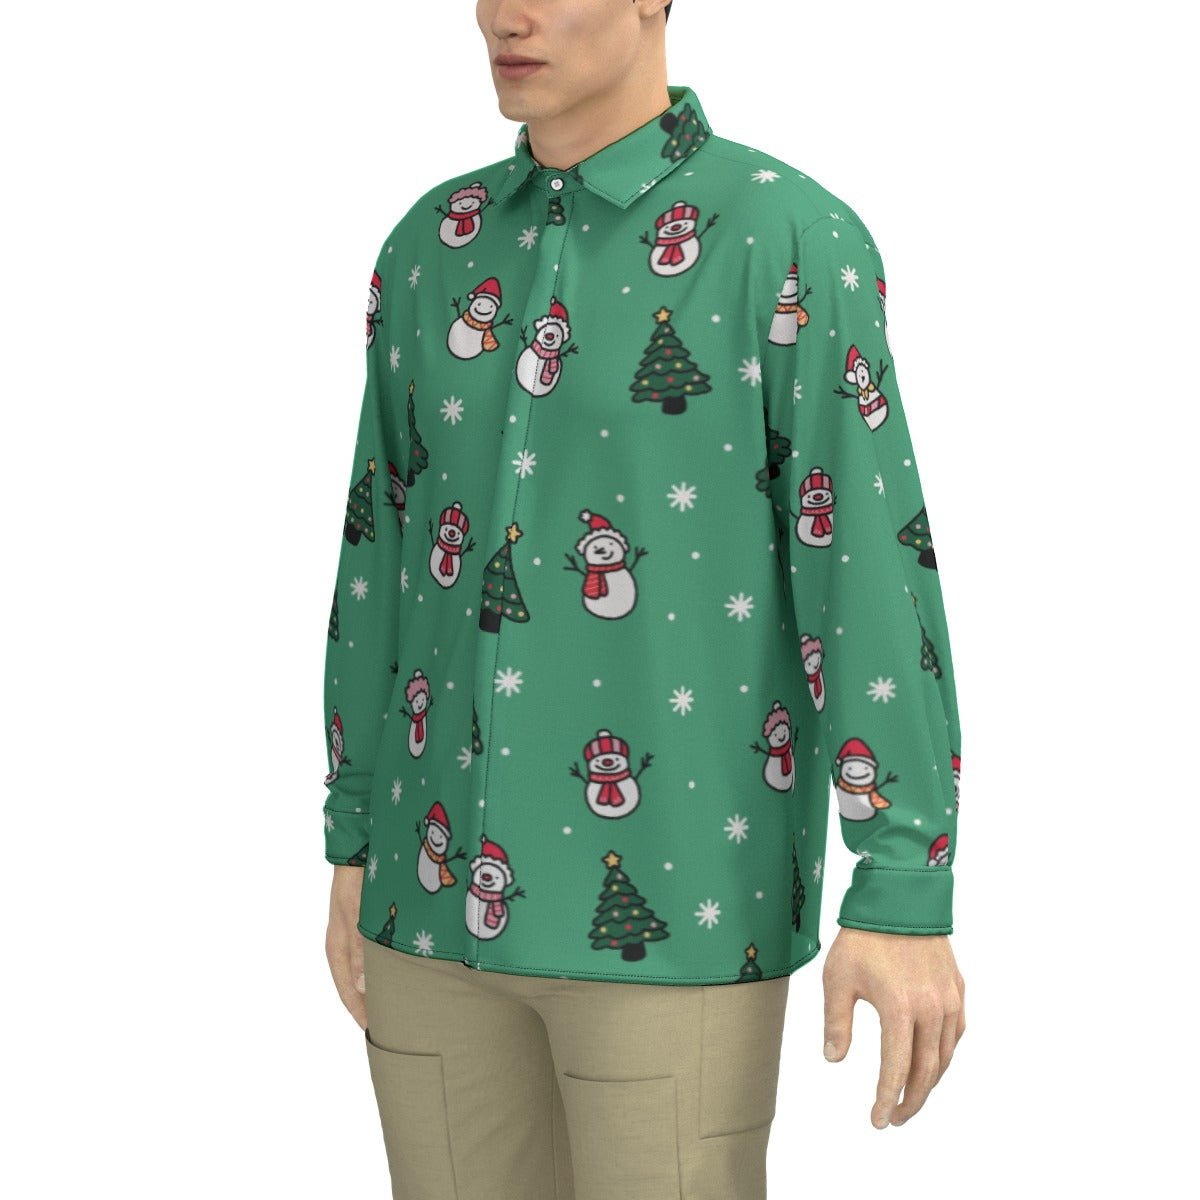 Men's Collar Christmas Shirt - Green Snowman - Festive Style